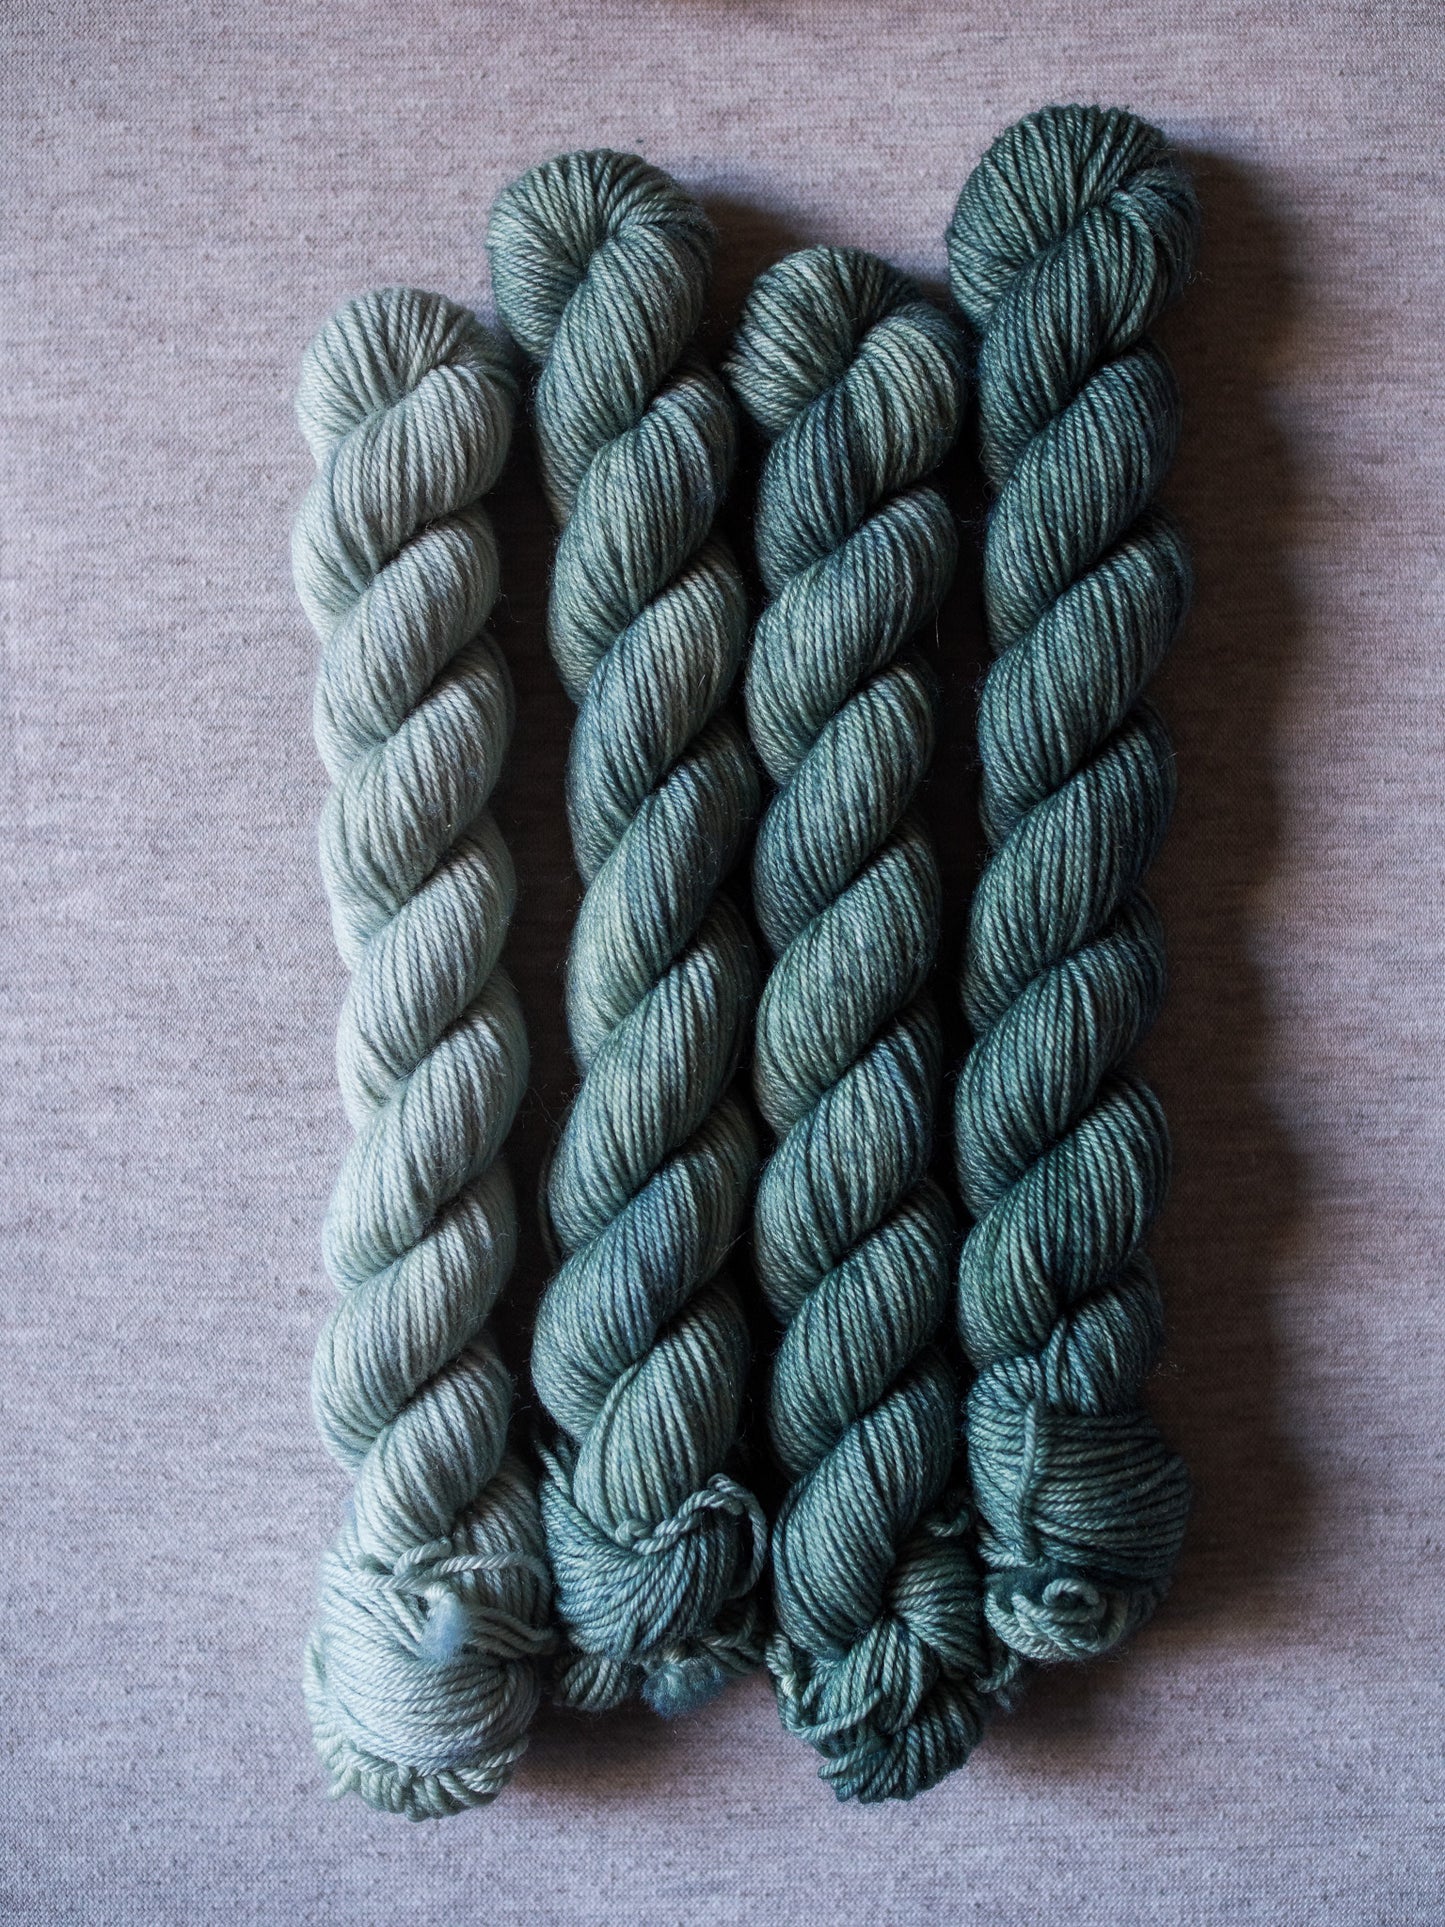 NEW IN! Westknits Geogradient MKAL yarn kit - 4 shade gradient set - Monochrome